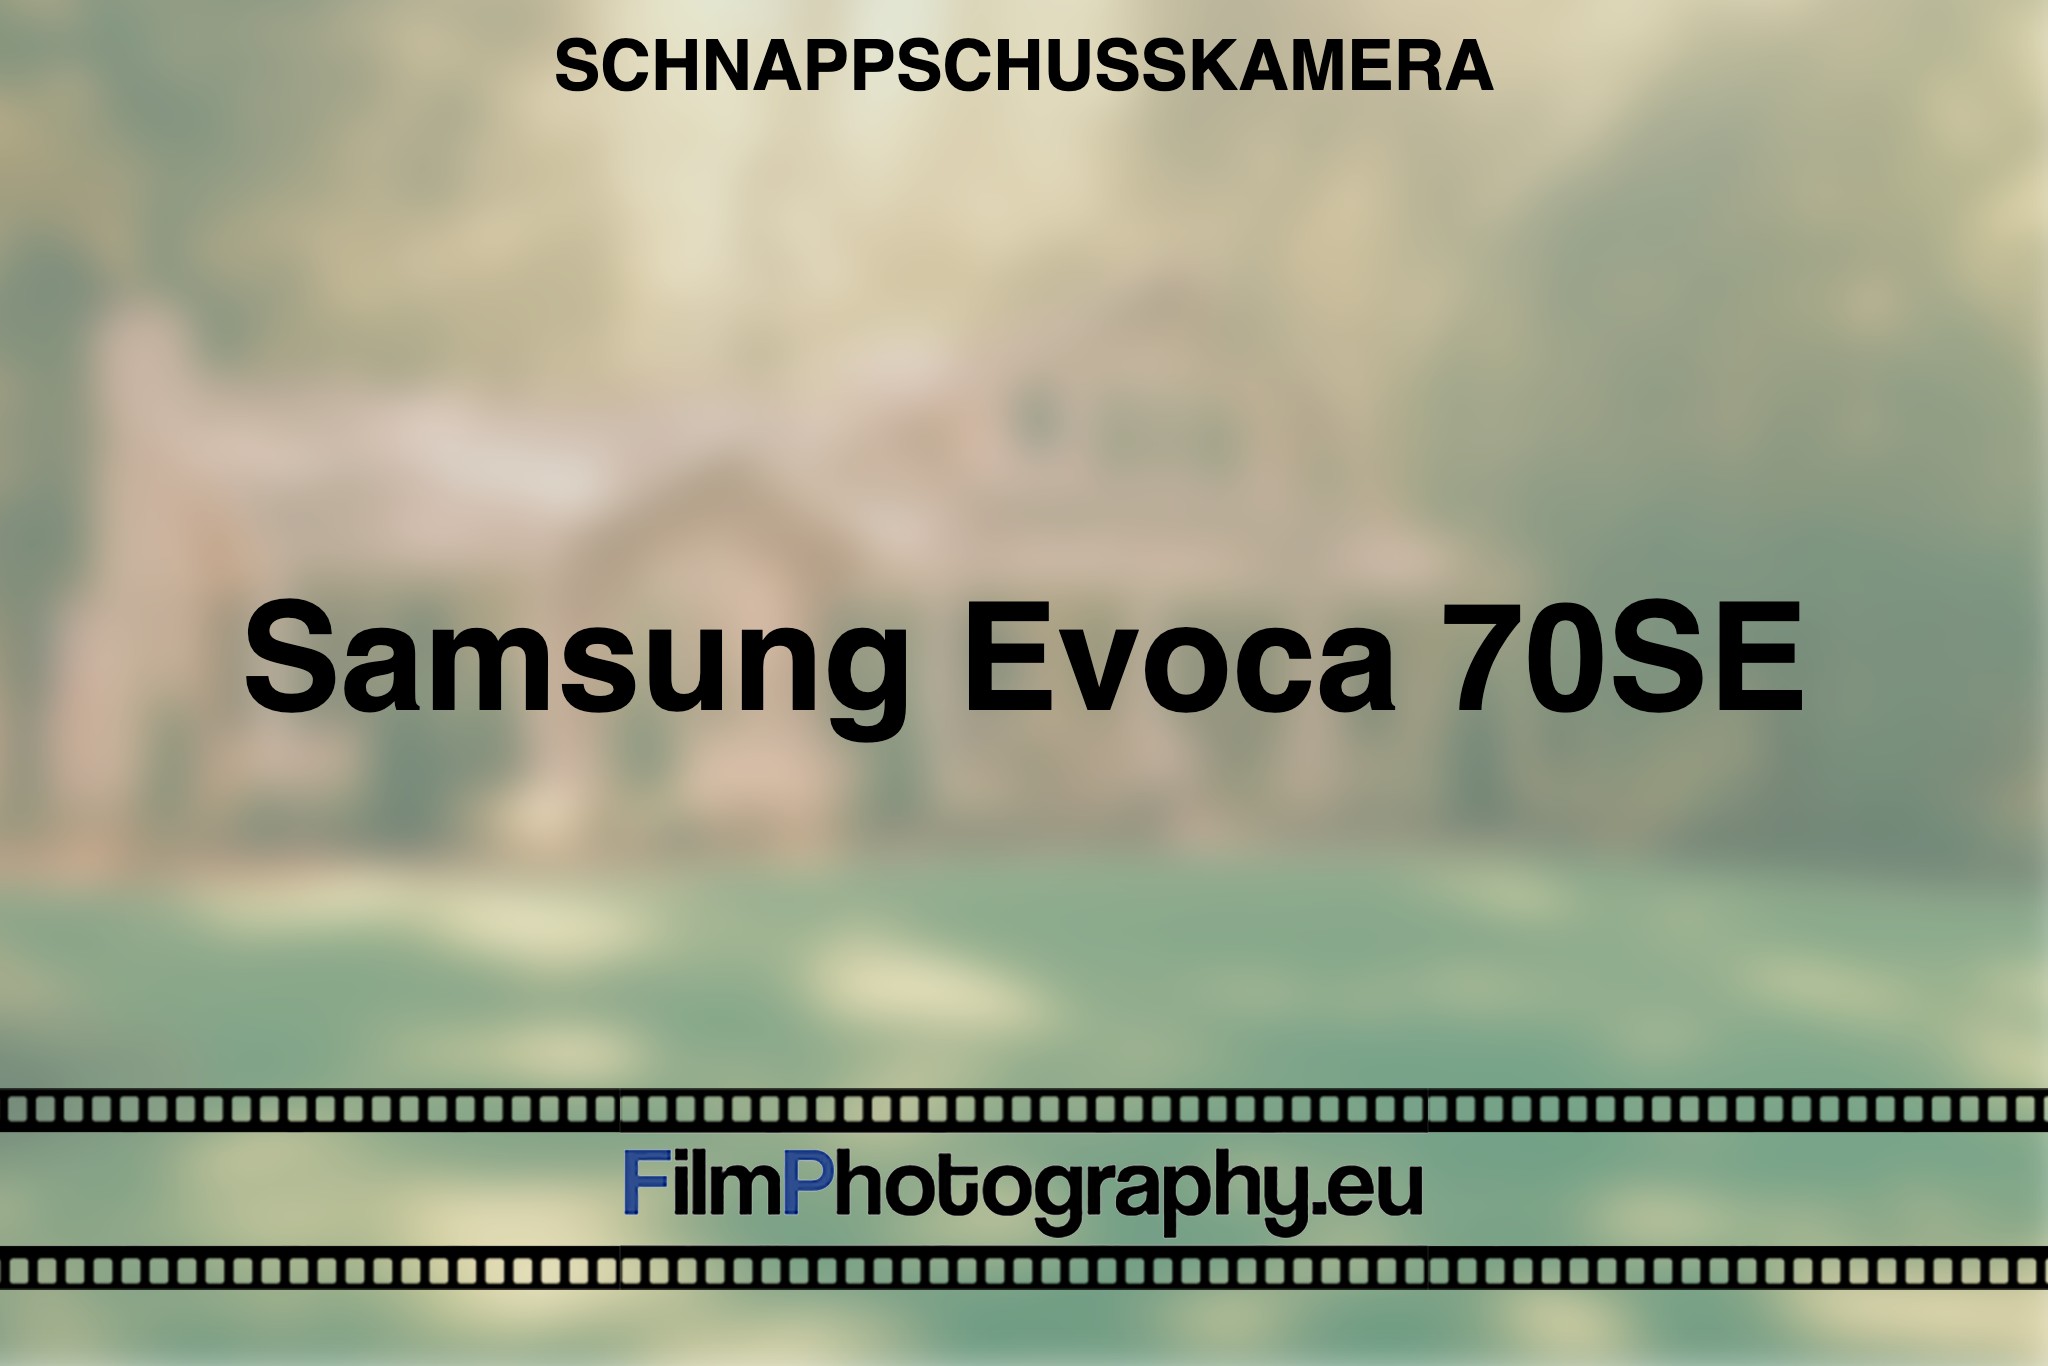 samsung-evoca-70se-schnappschusskamera-bnv